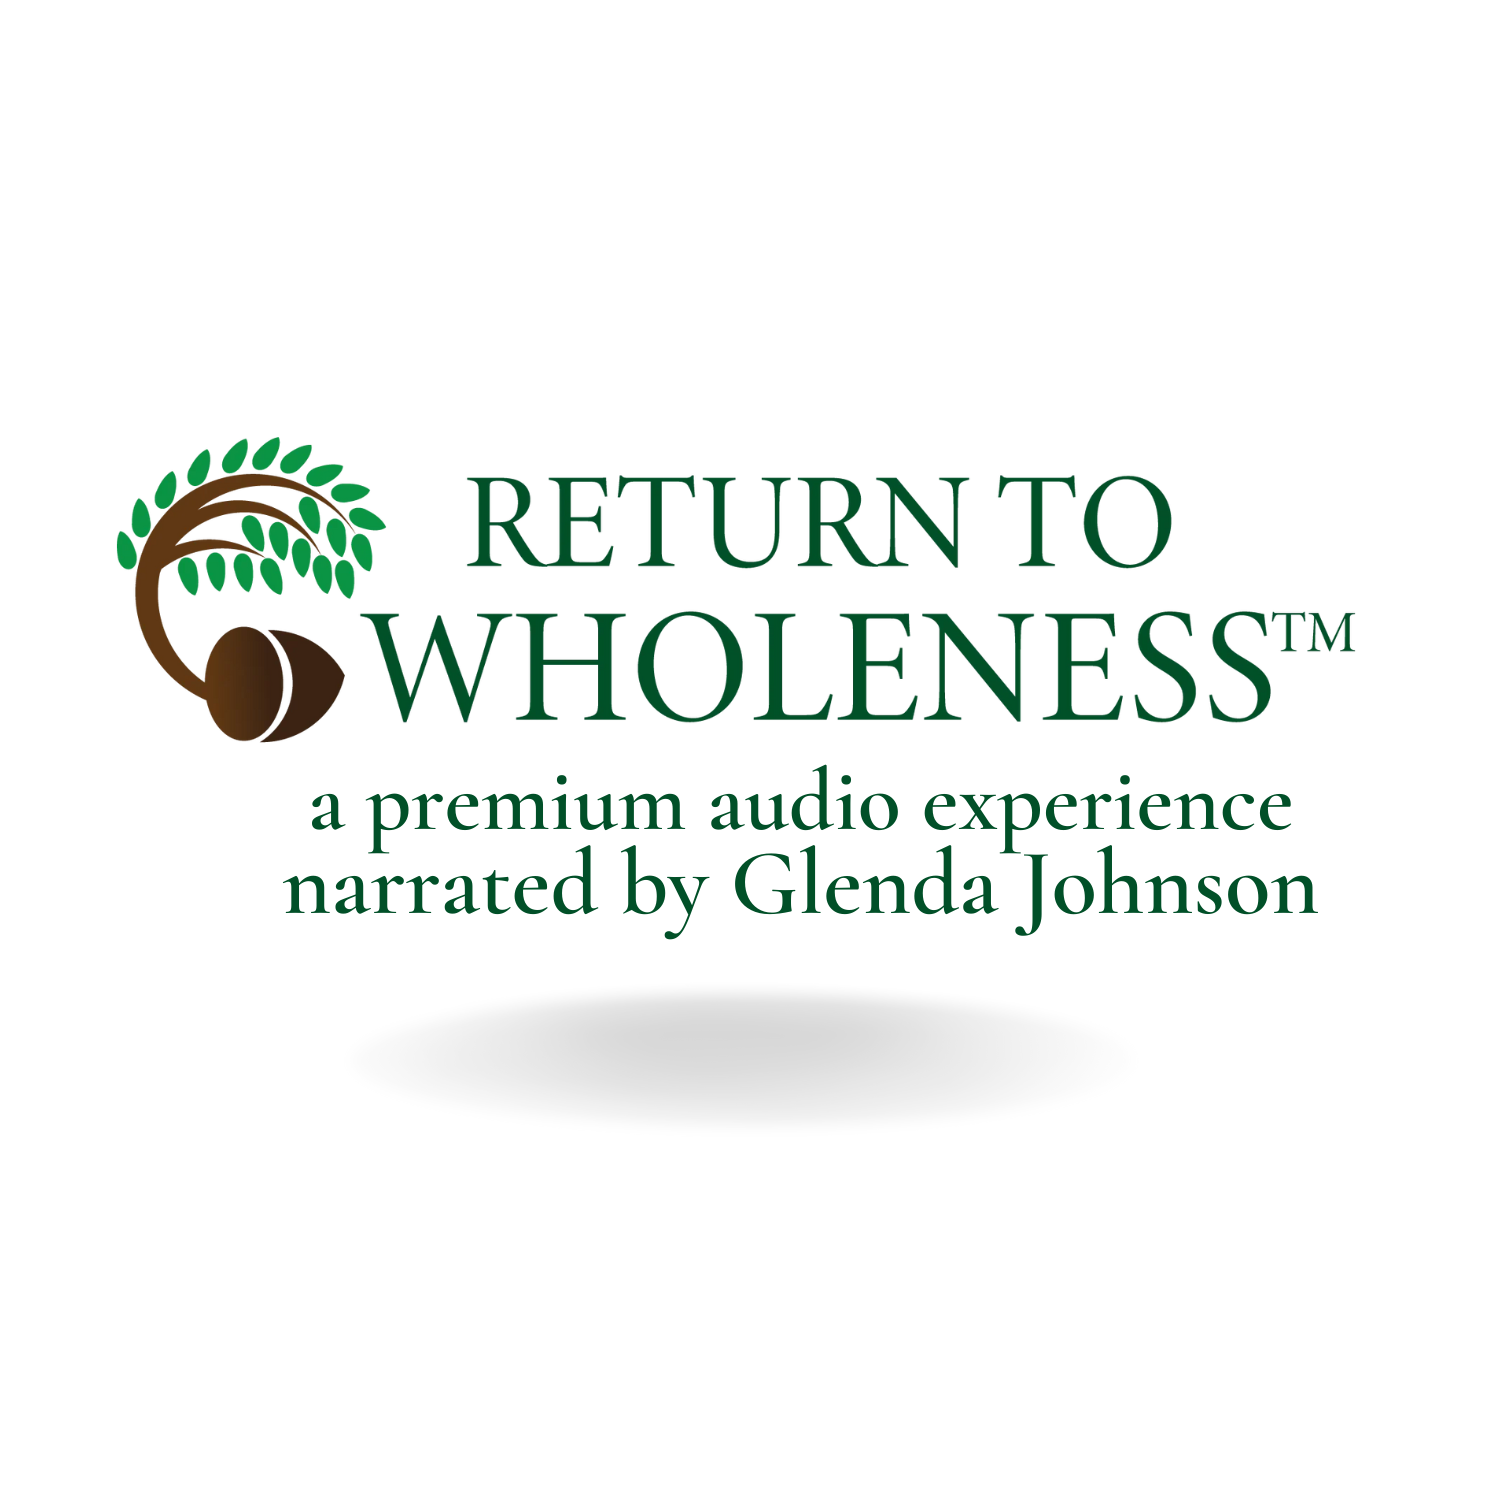 Return to Wholeness Audio Experience by Glenda Johnson